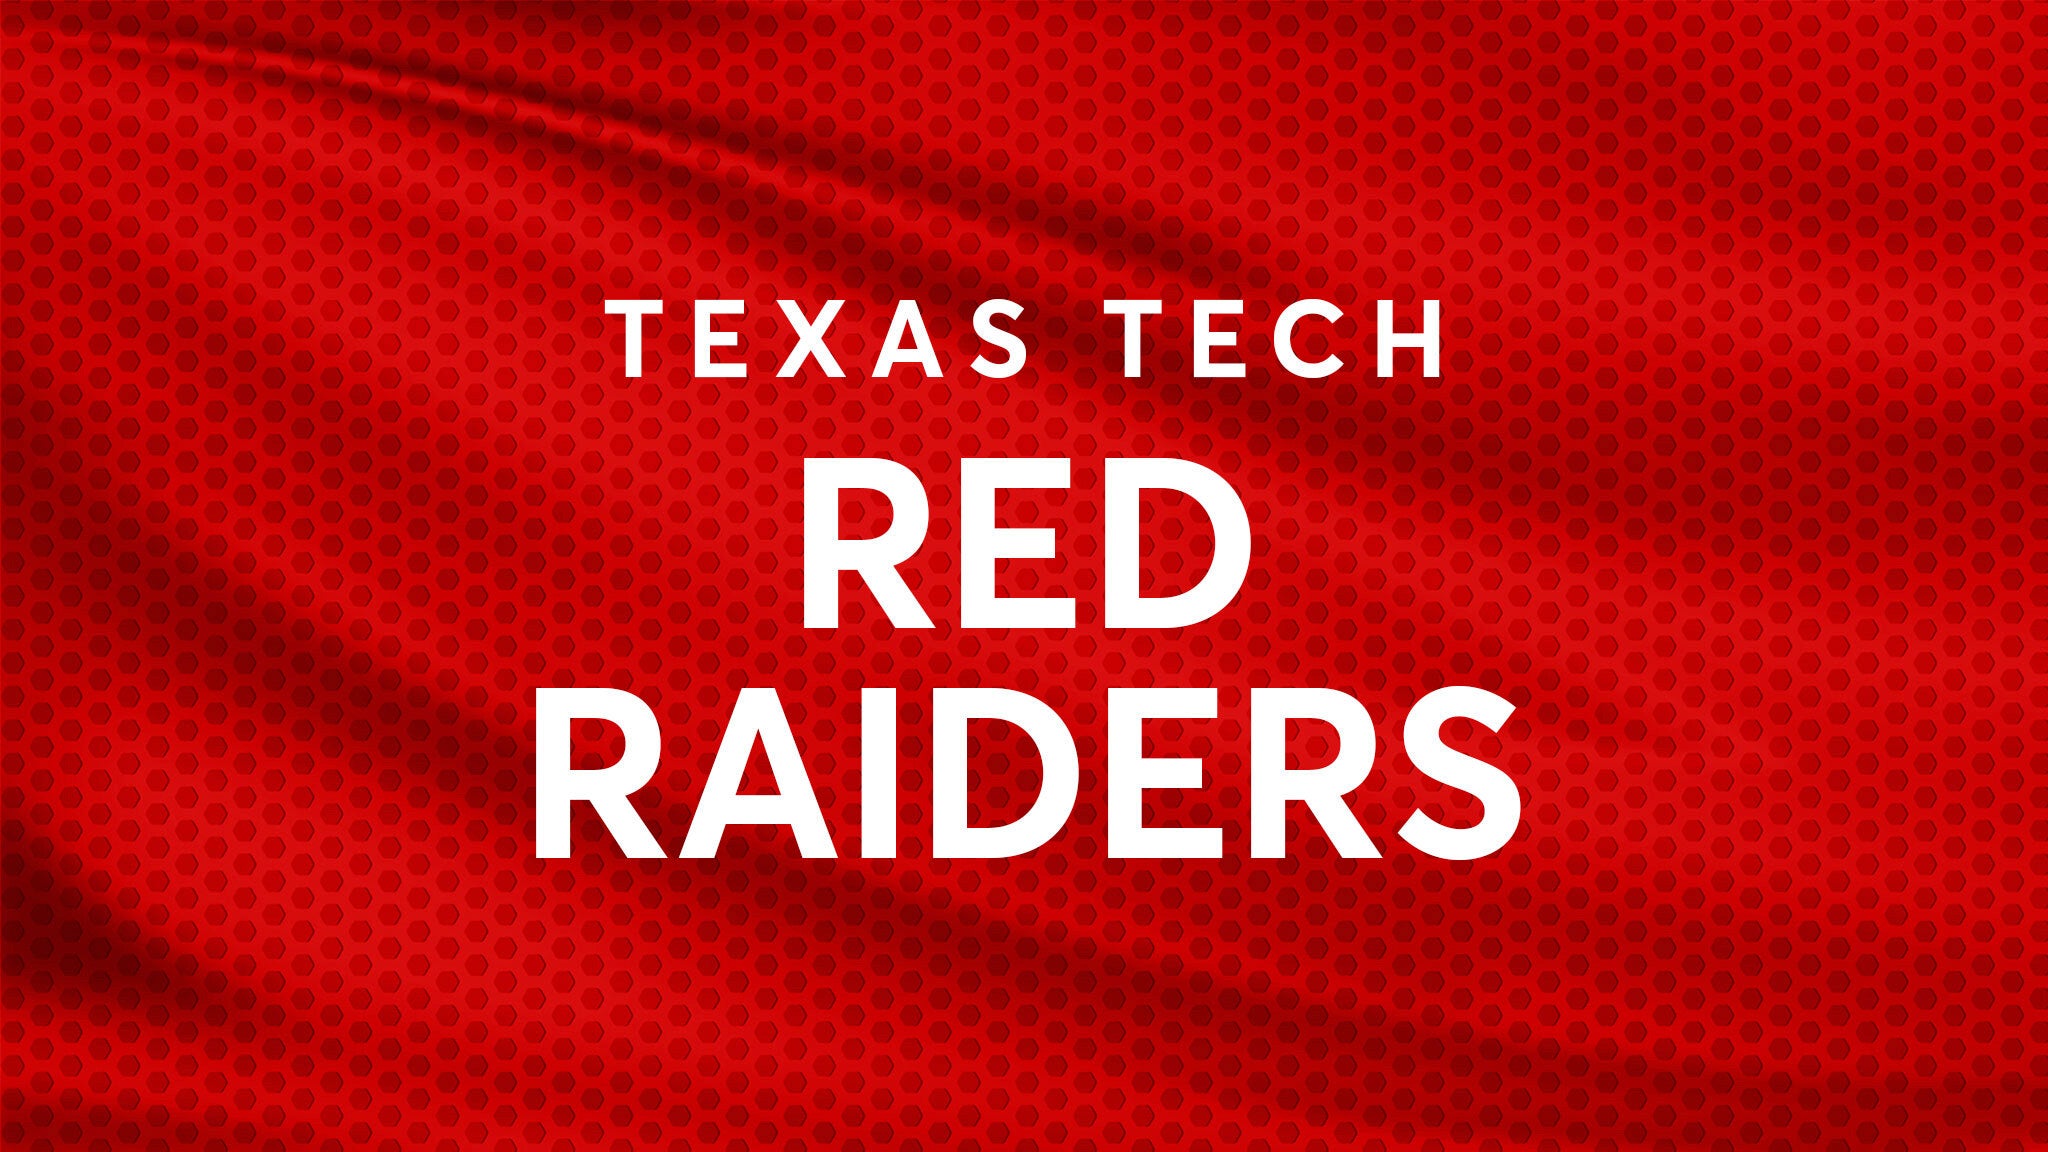 Texas Tech Red Raiders Football vs. Baylor Bears Football hero